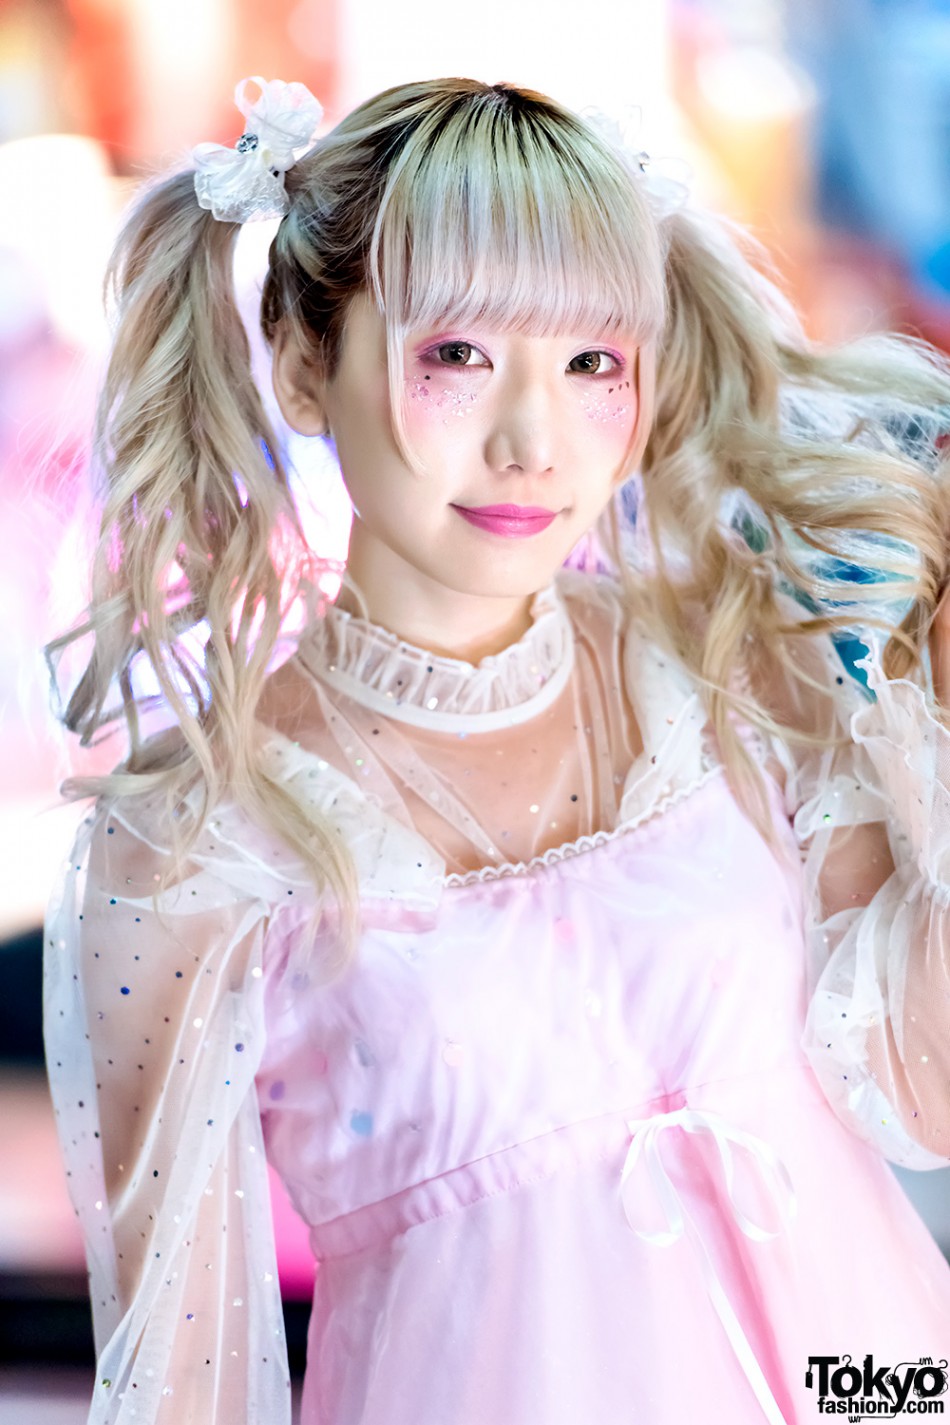 Japanese Idol Rinahamu in Harajuku w/ Twintails & Kawaii Pastel Fashion